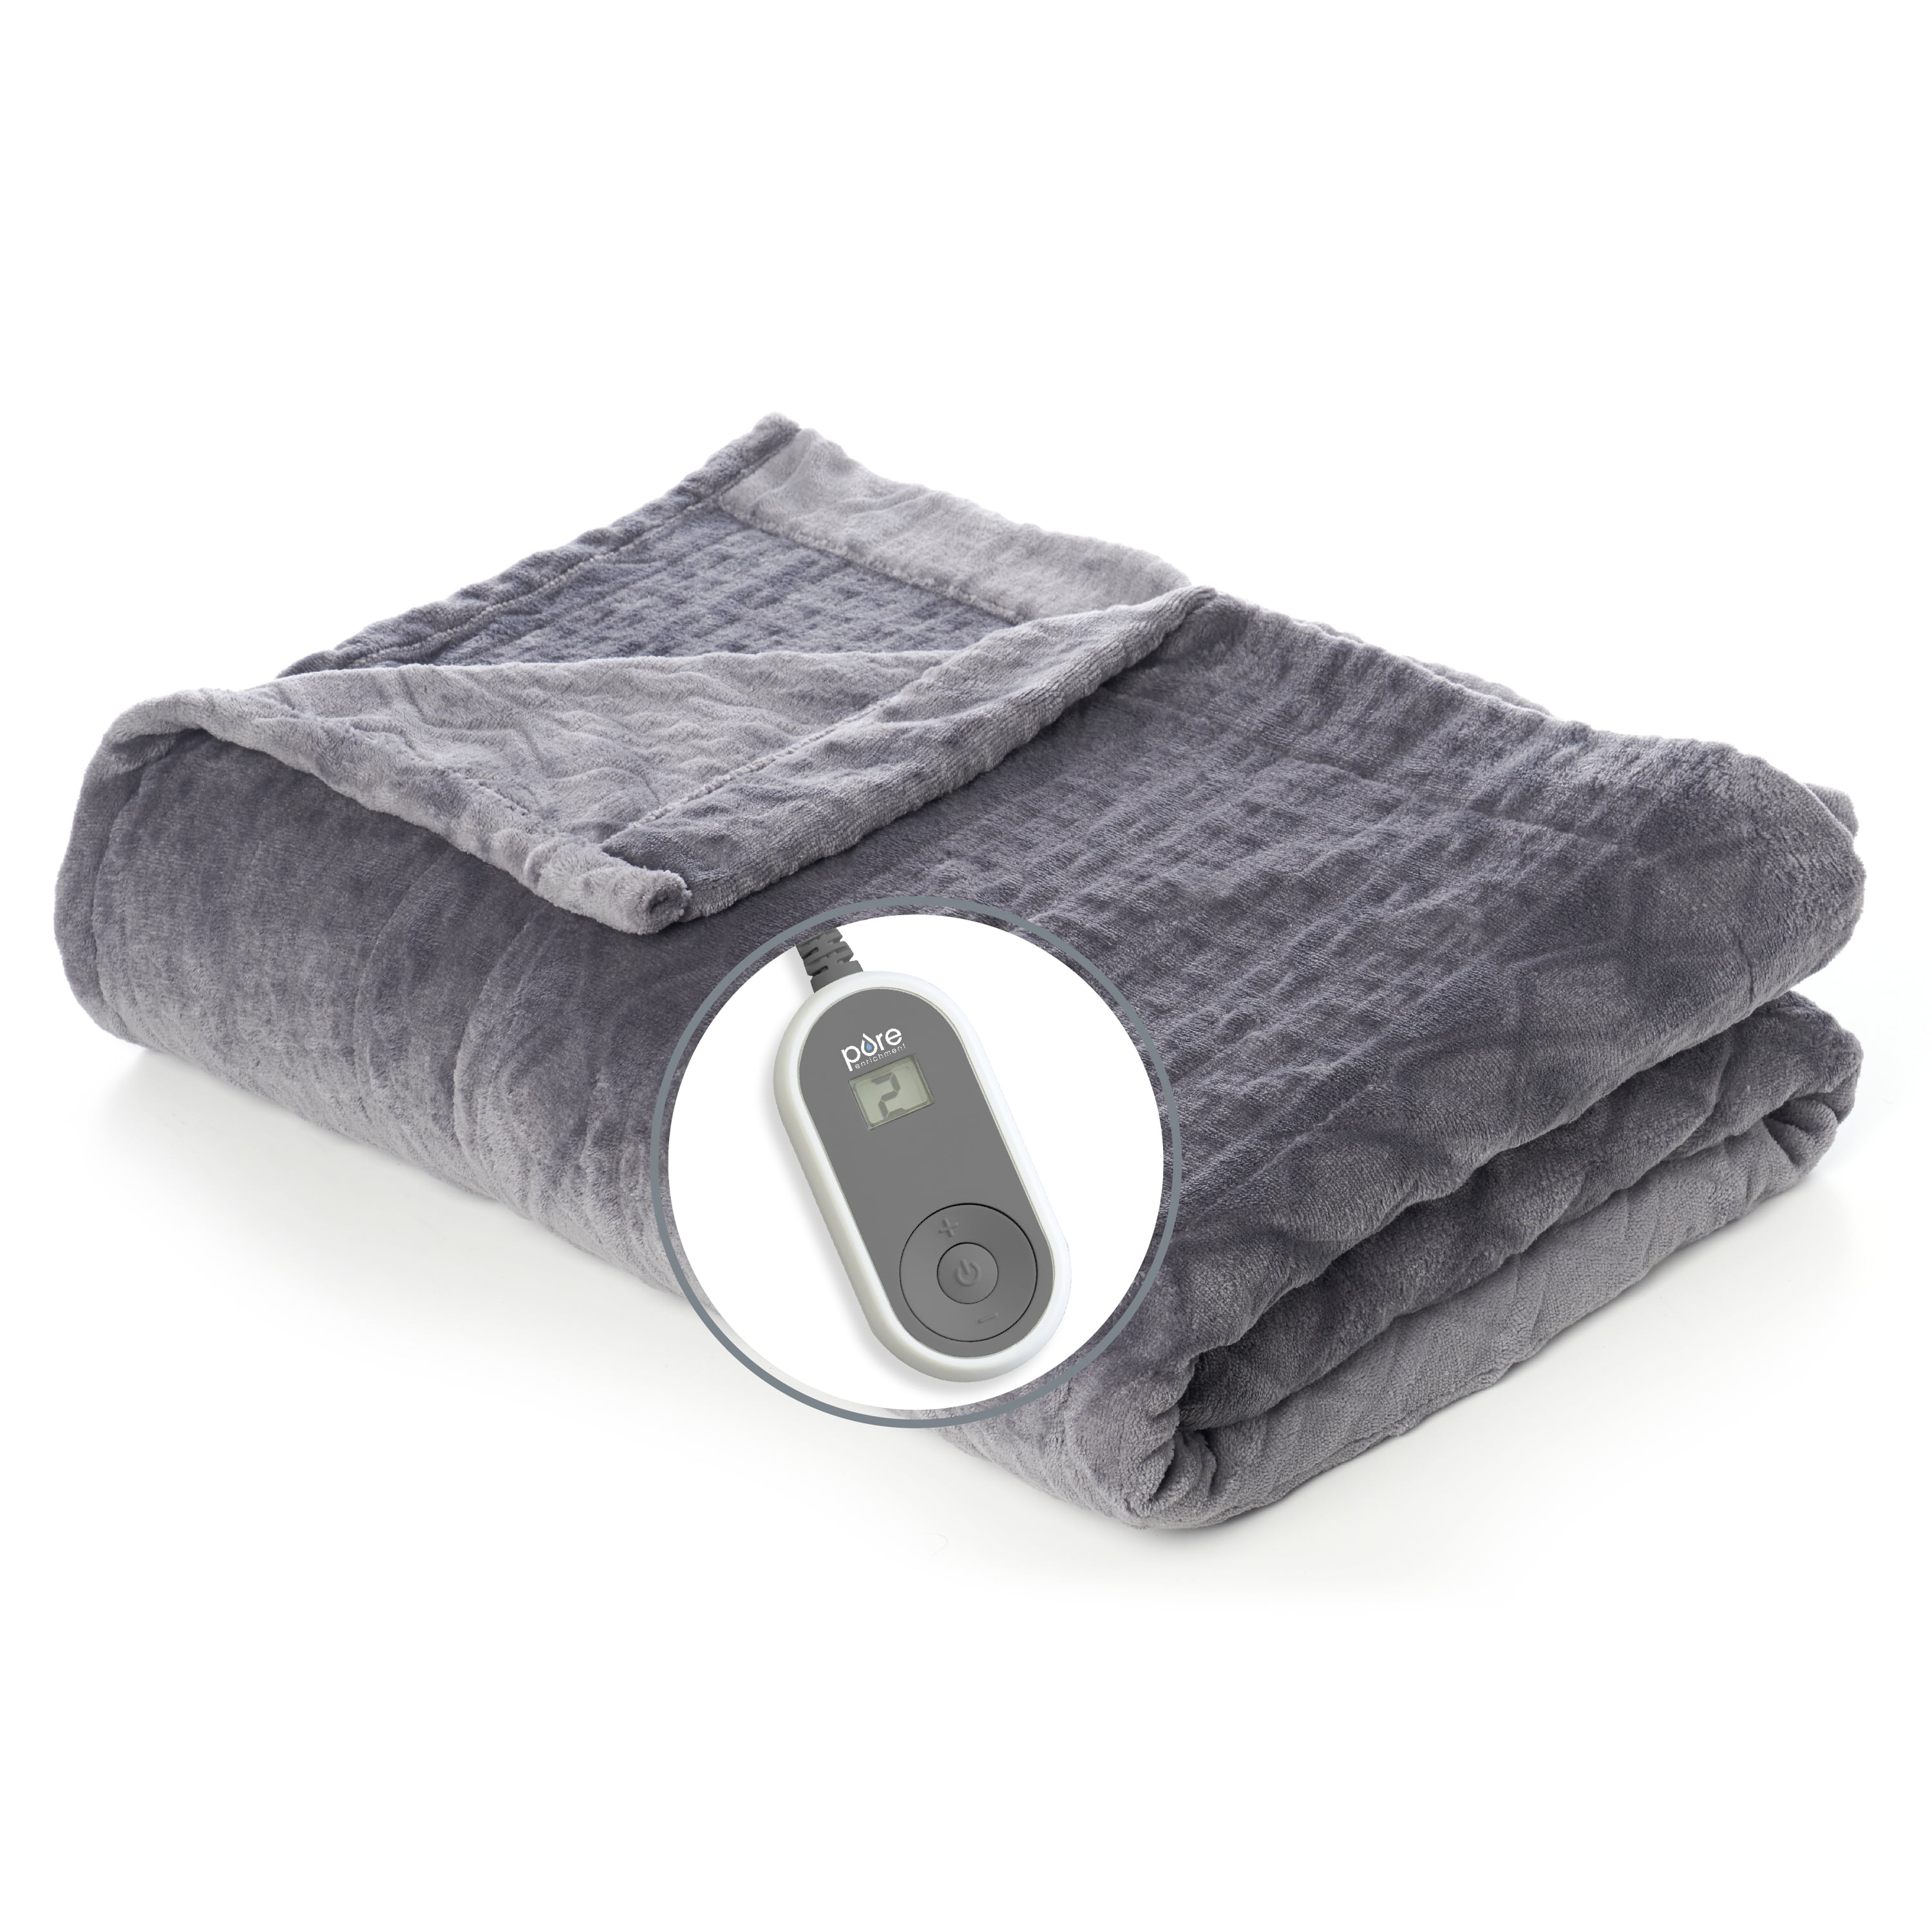 Blue Heated Electric Fleece Blanket with 5 Heat Settings Machine Wash Twin 